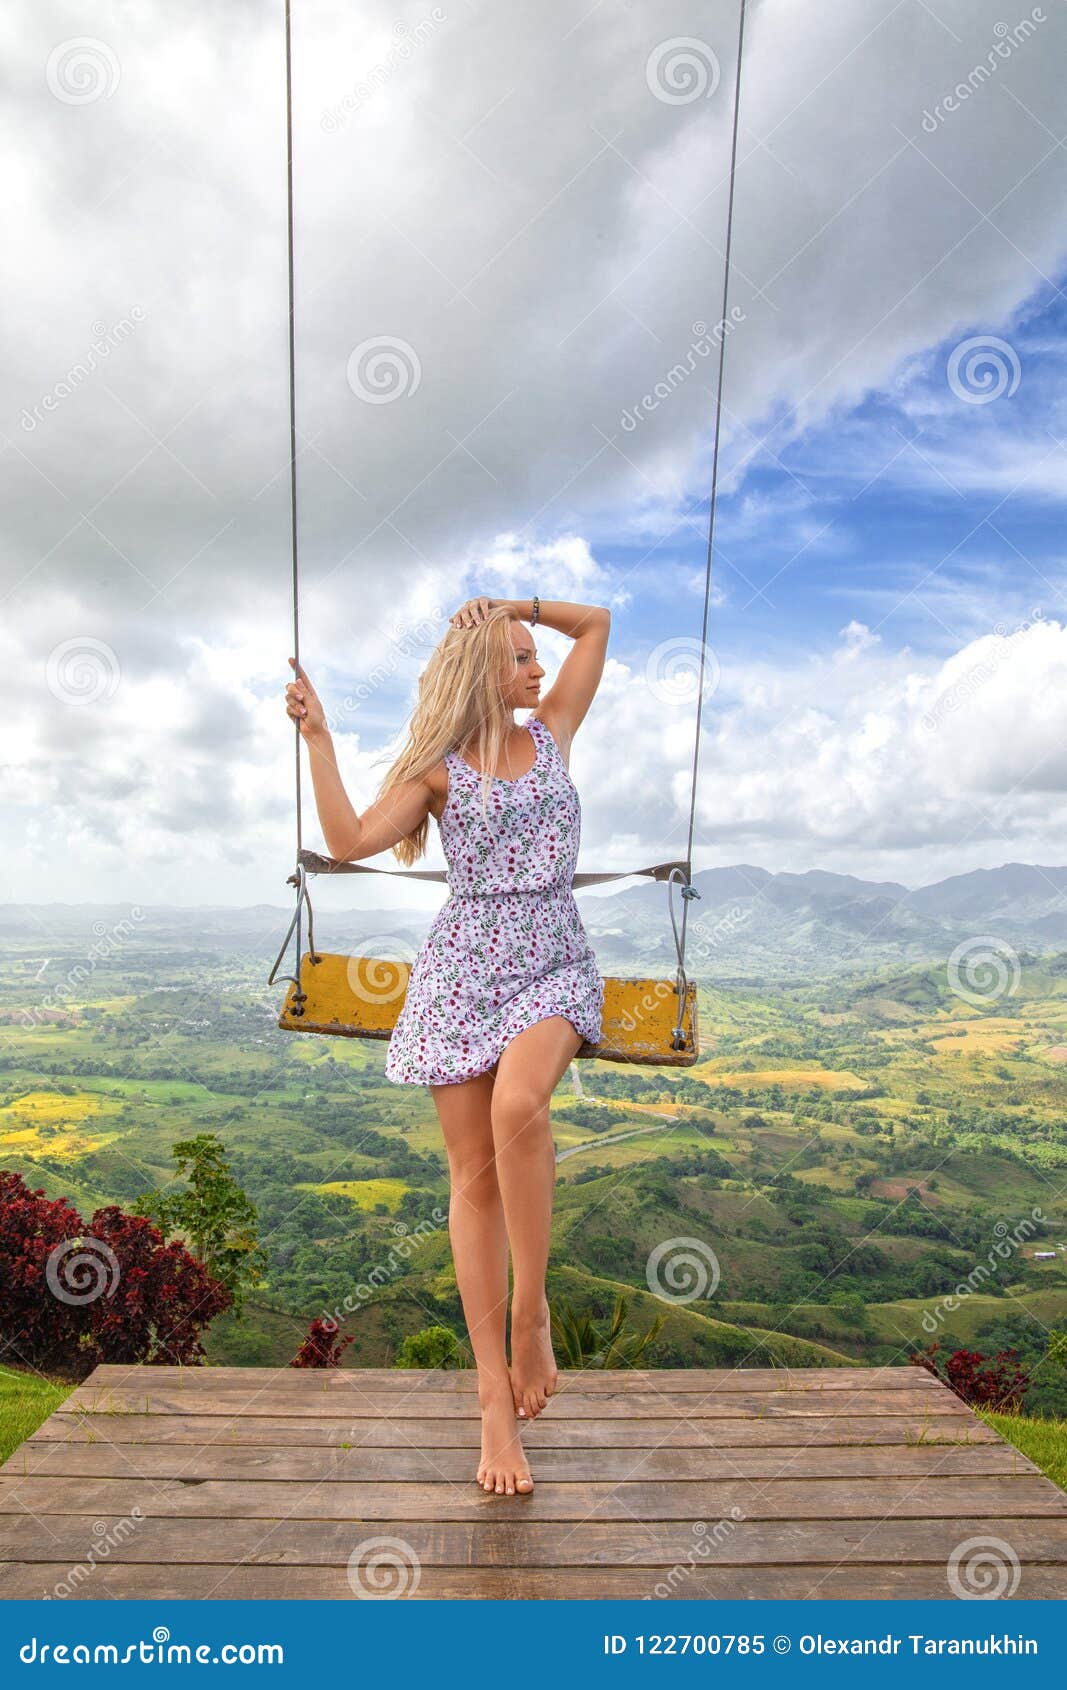 girs posing near swing on the redonda mountain